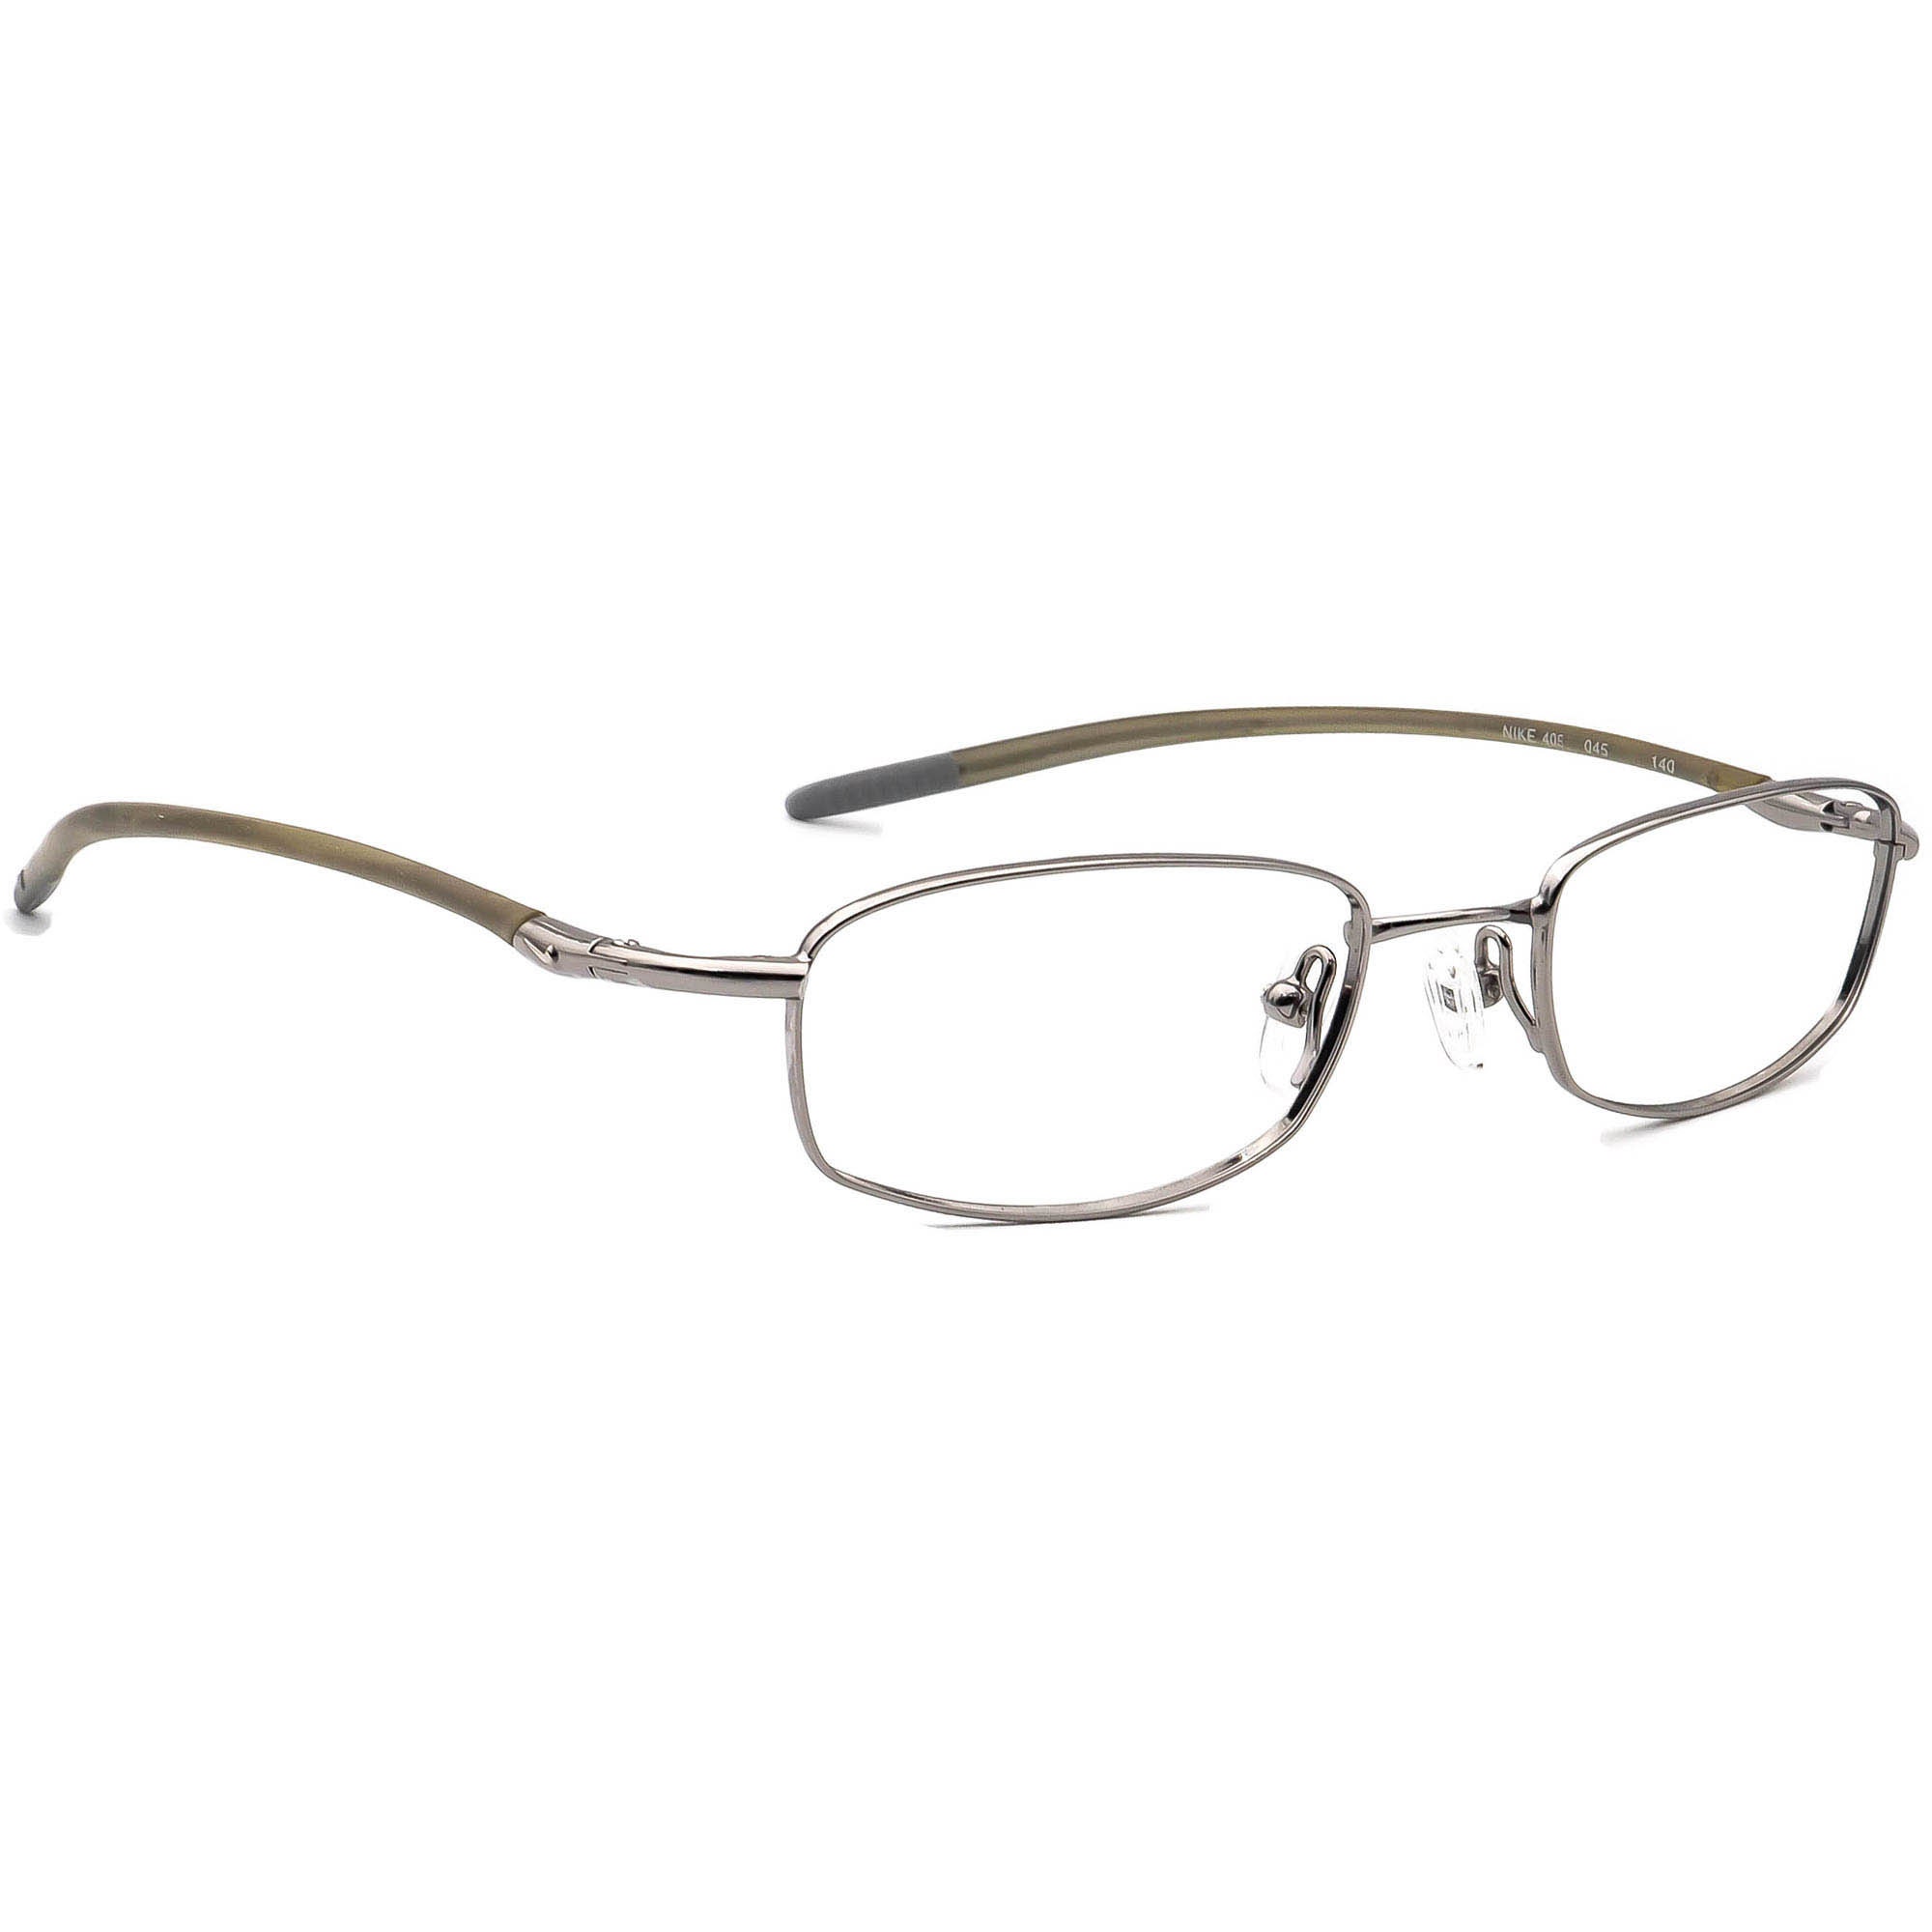 Katholiek Om toevlucht te zoeken Gevoel van schuld Nike Eyeglasses 4093 045 Flexon Silver Rectangular Frame - Etsy